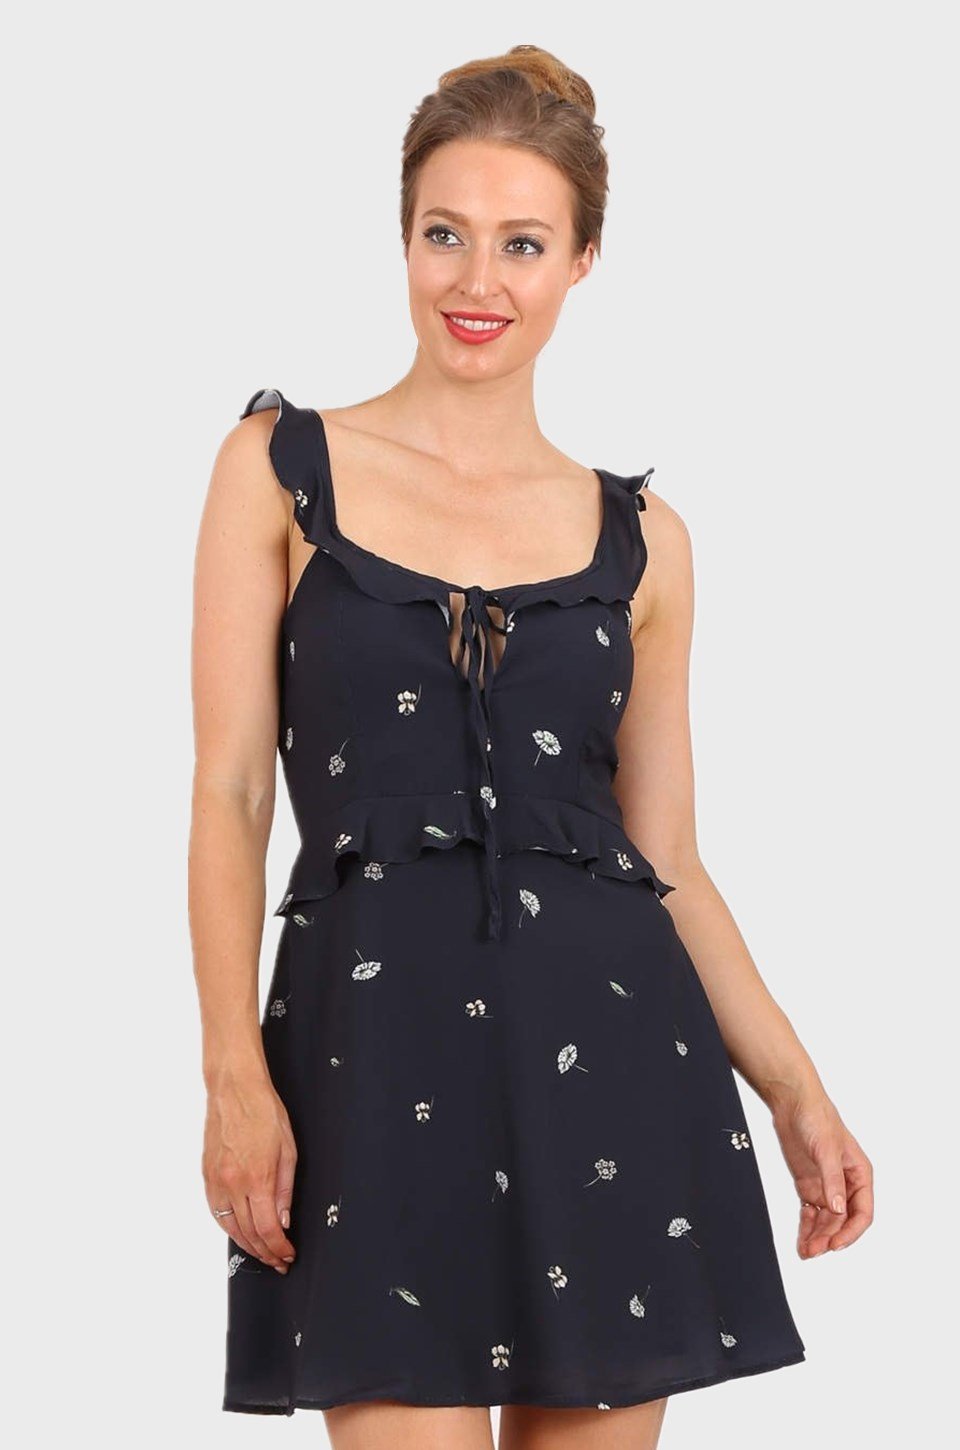 MISS PINKI Ryleigh georgette ruffle mini summer Dress in black floral